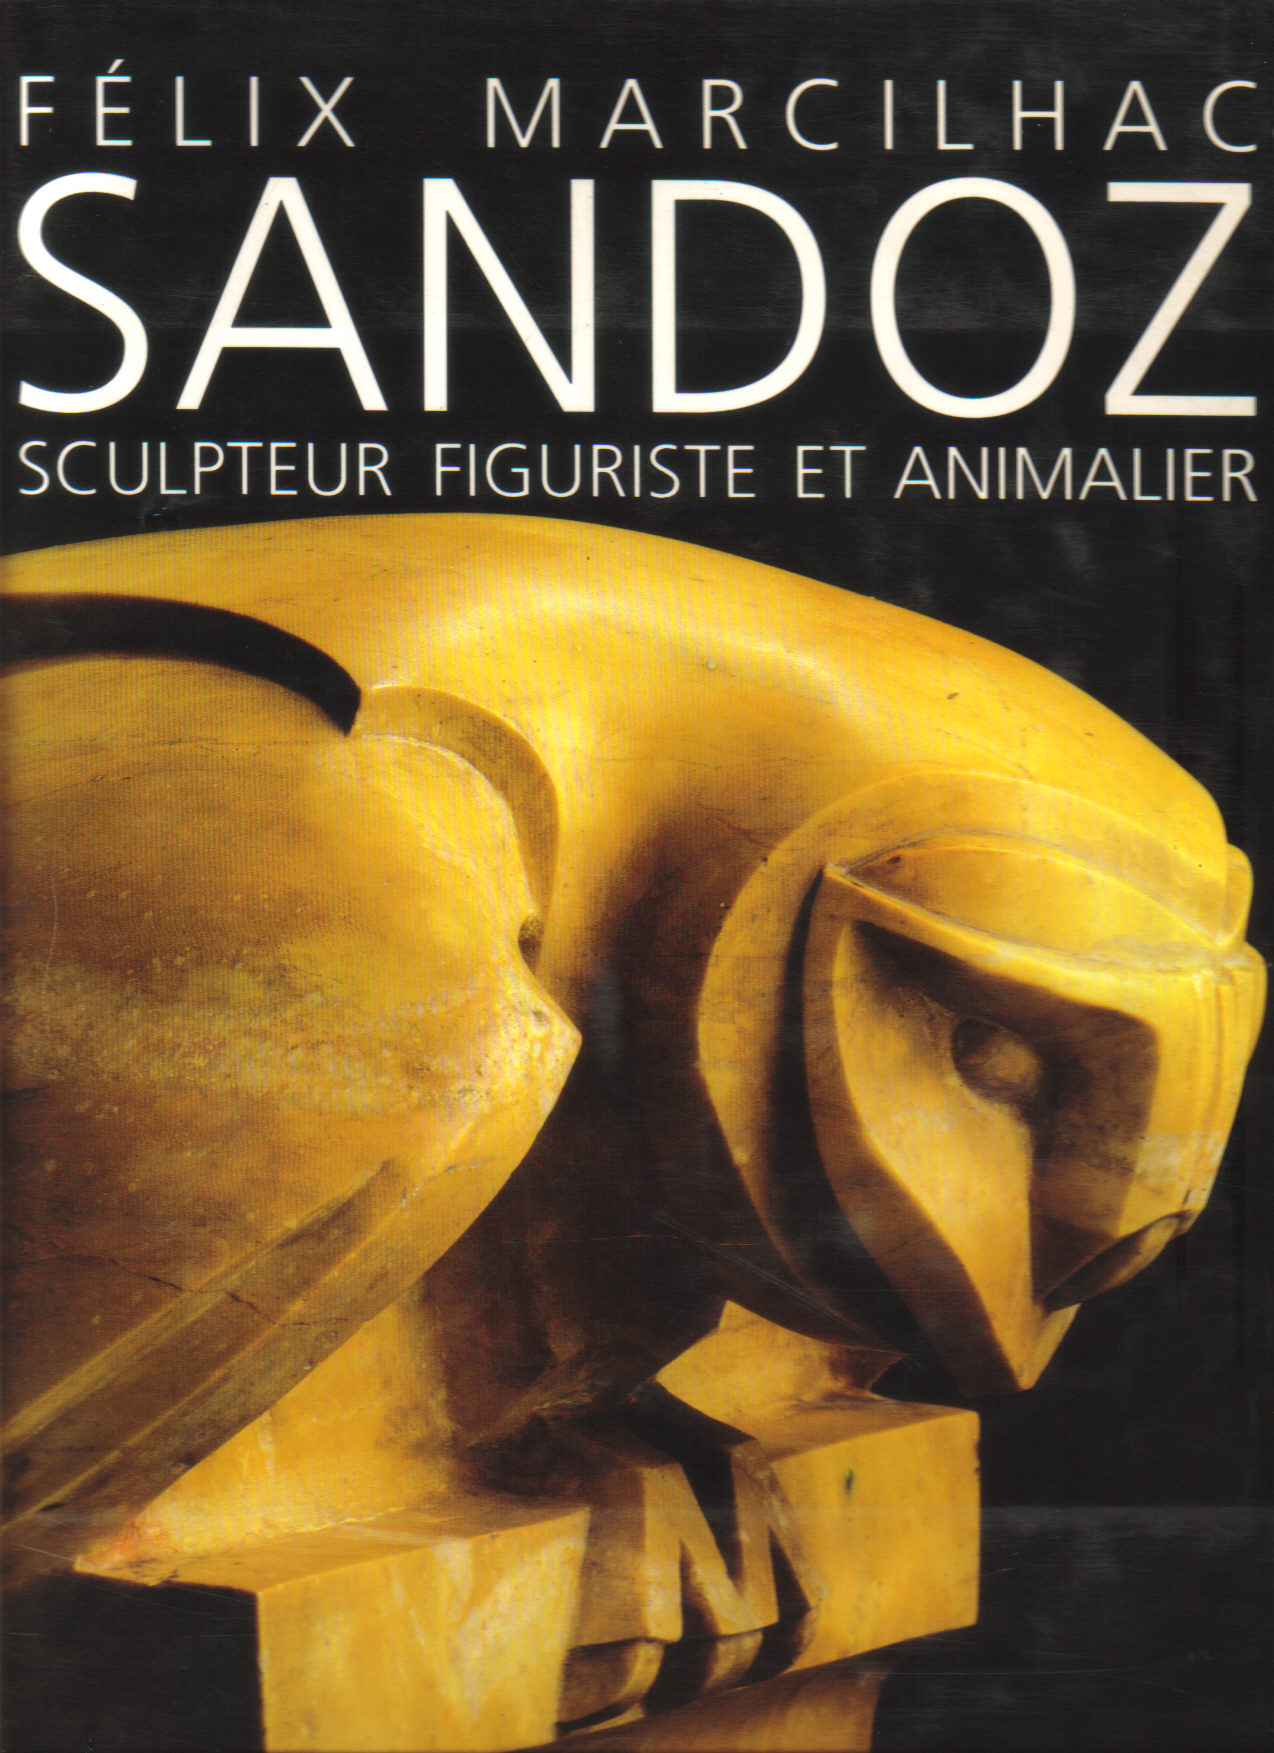 Marcilhac sandoz book front cover